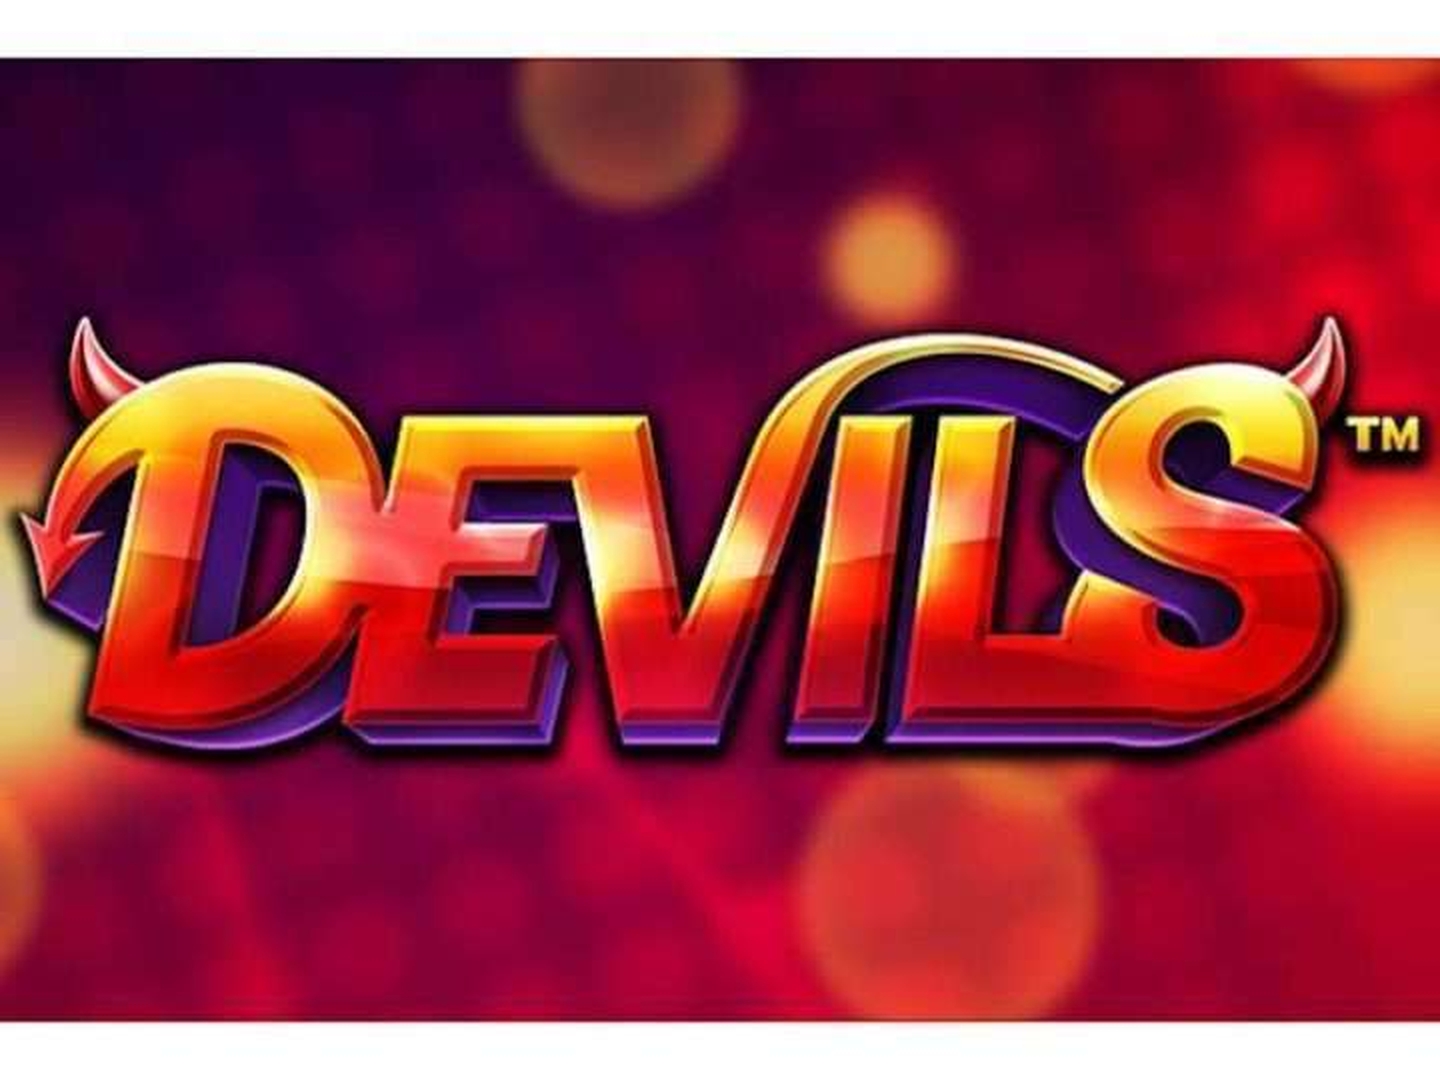 Devils demo